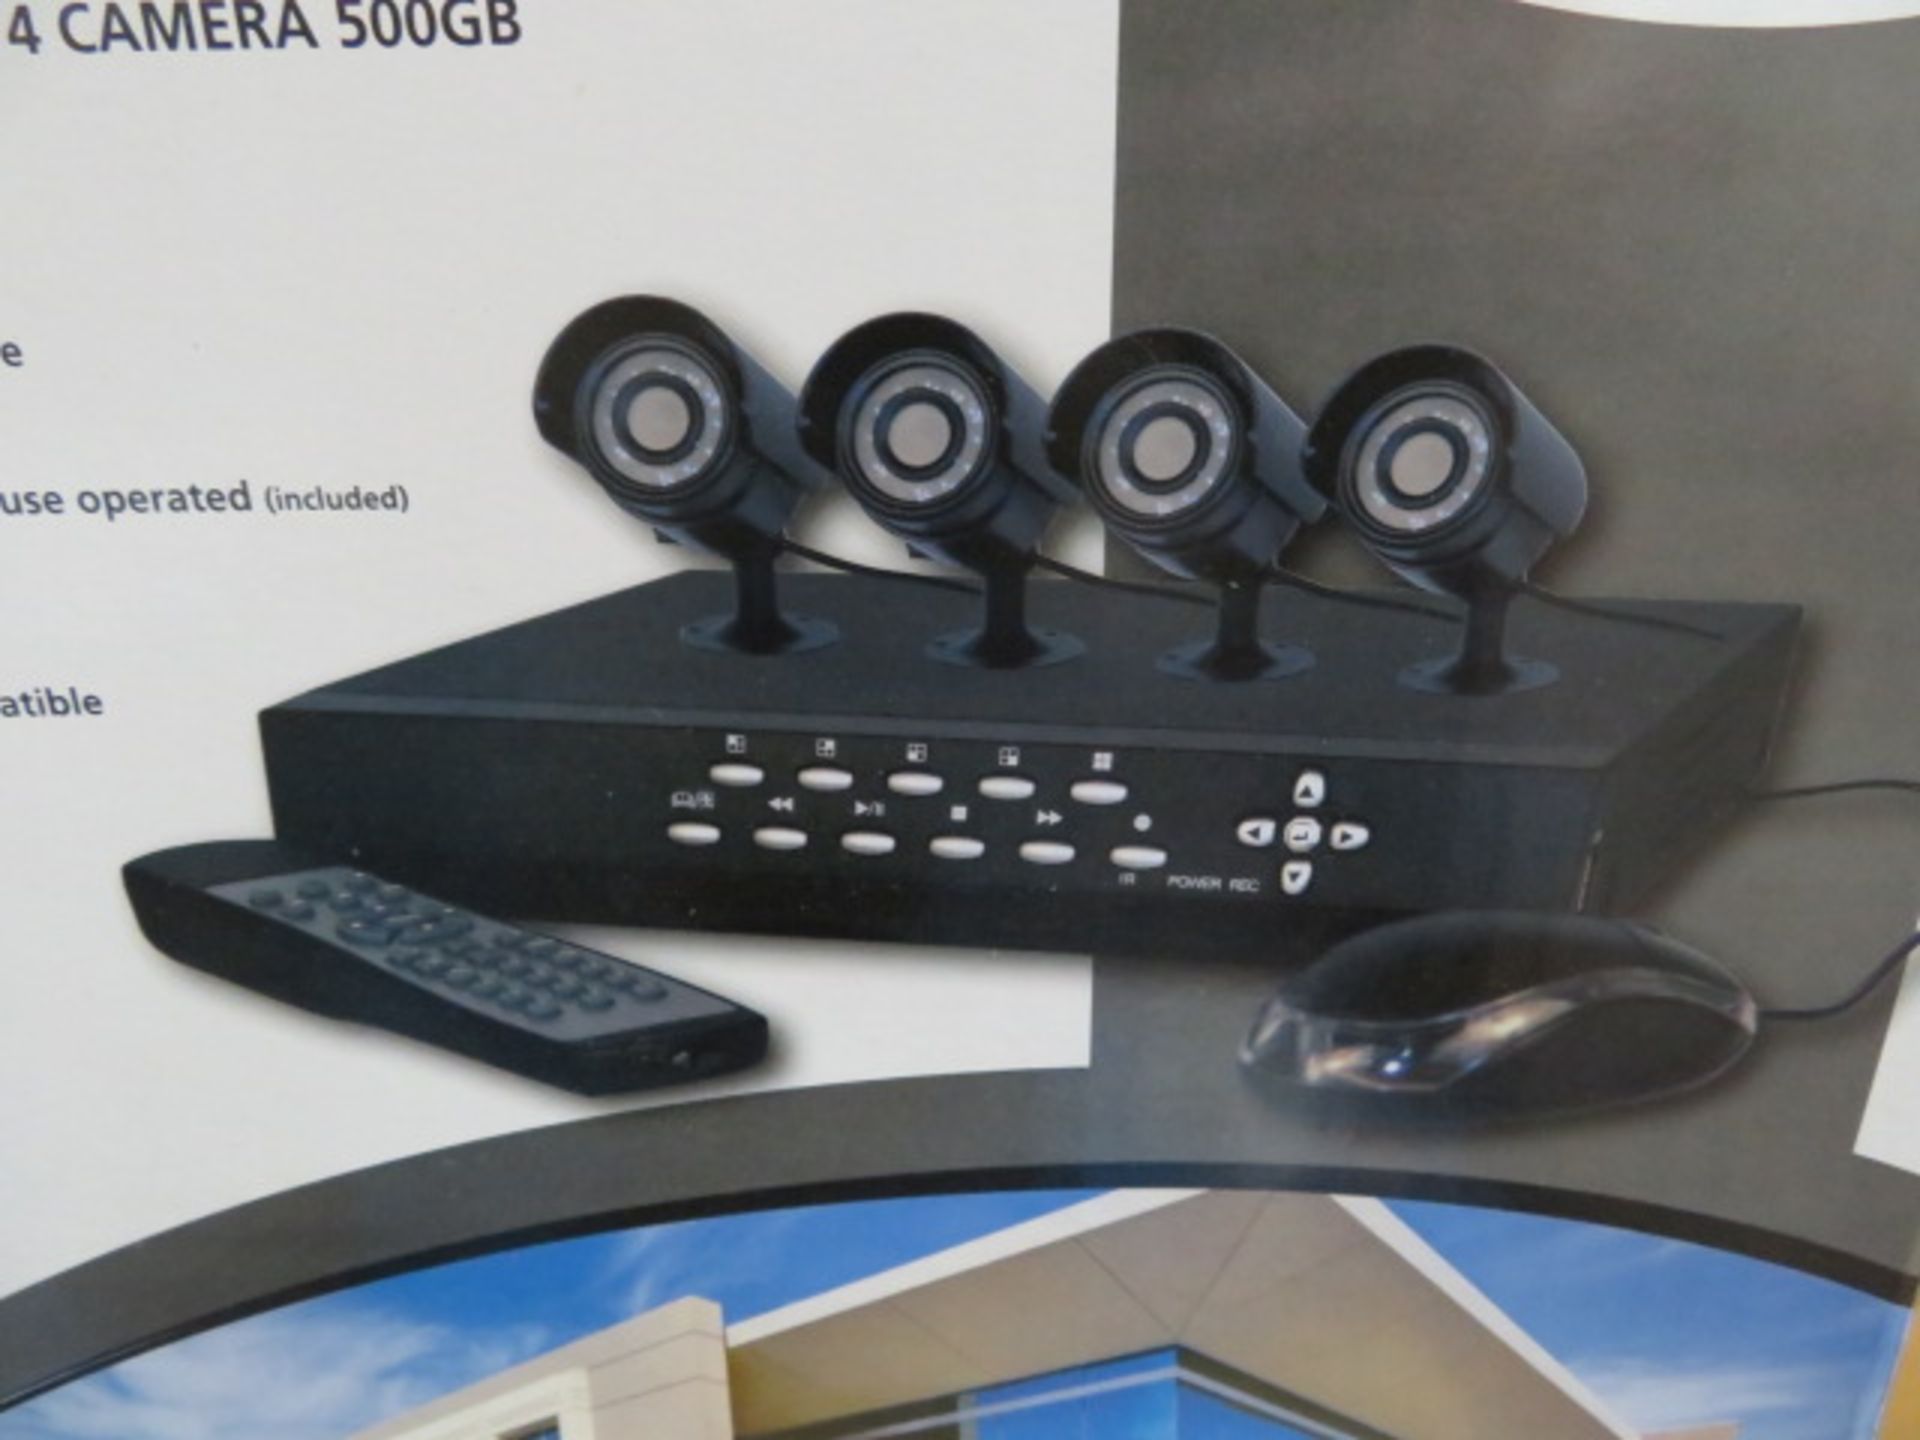 New & Boxed Byron Dvr500Set. Professional Cctv System. 4 Camera 500Gb. 4 Colour Cameras, Built ... - Image 2 of 3